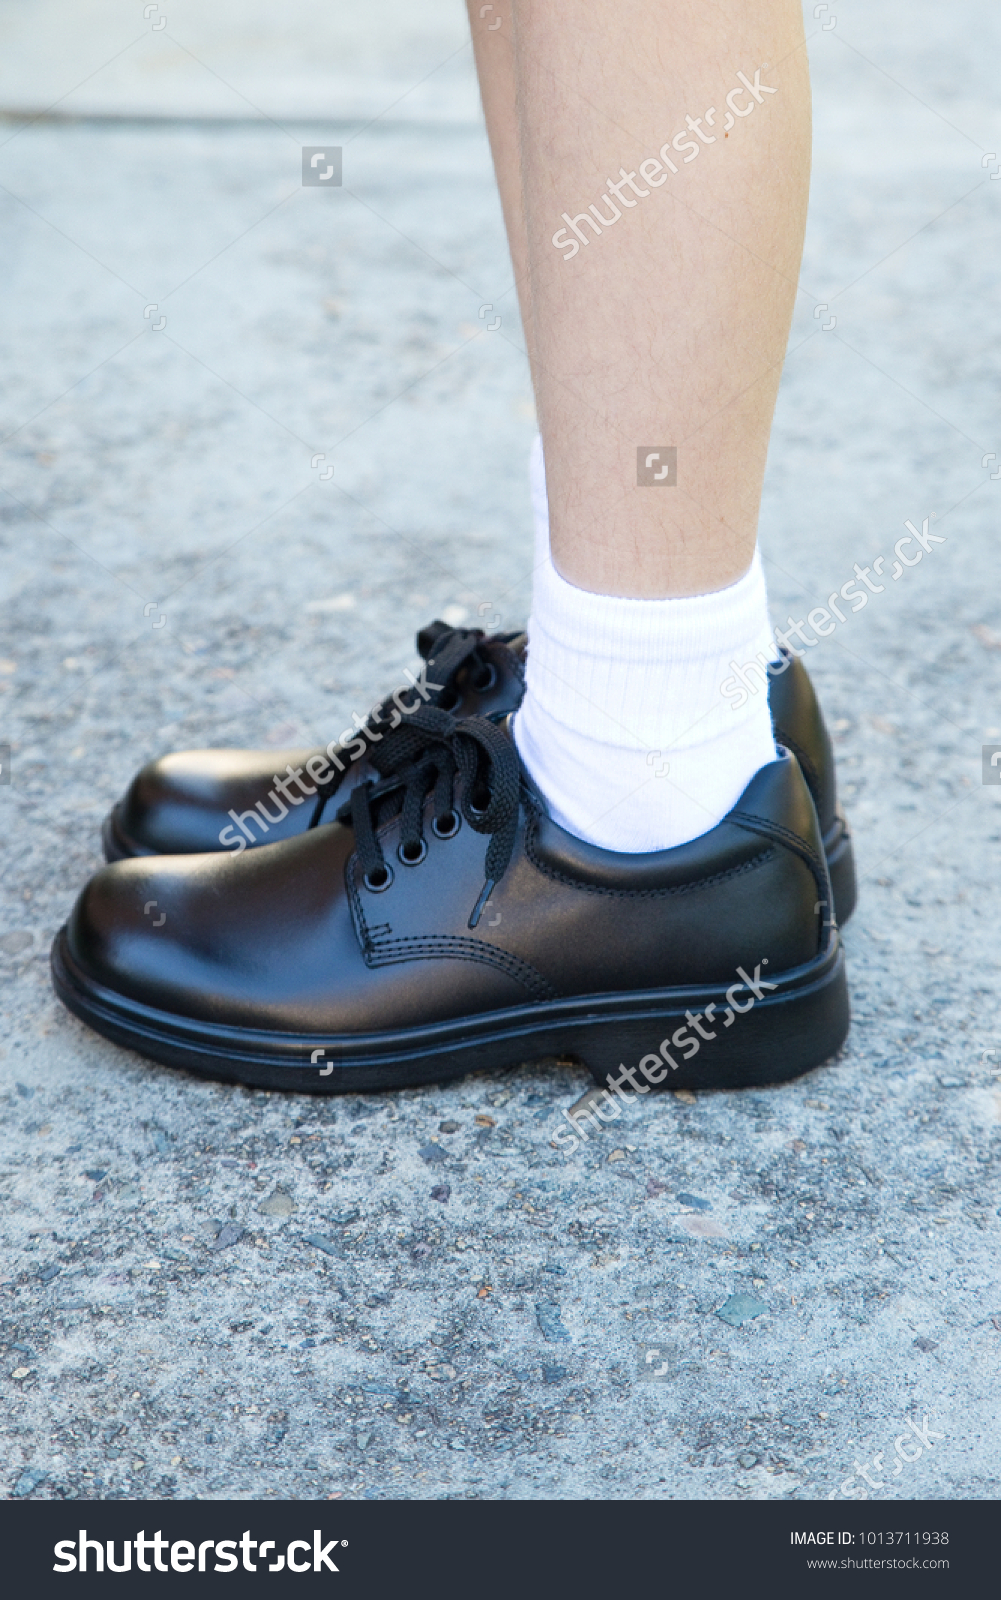 black oxford school shoes